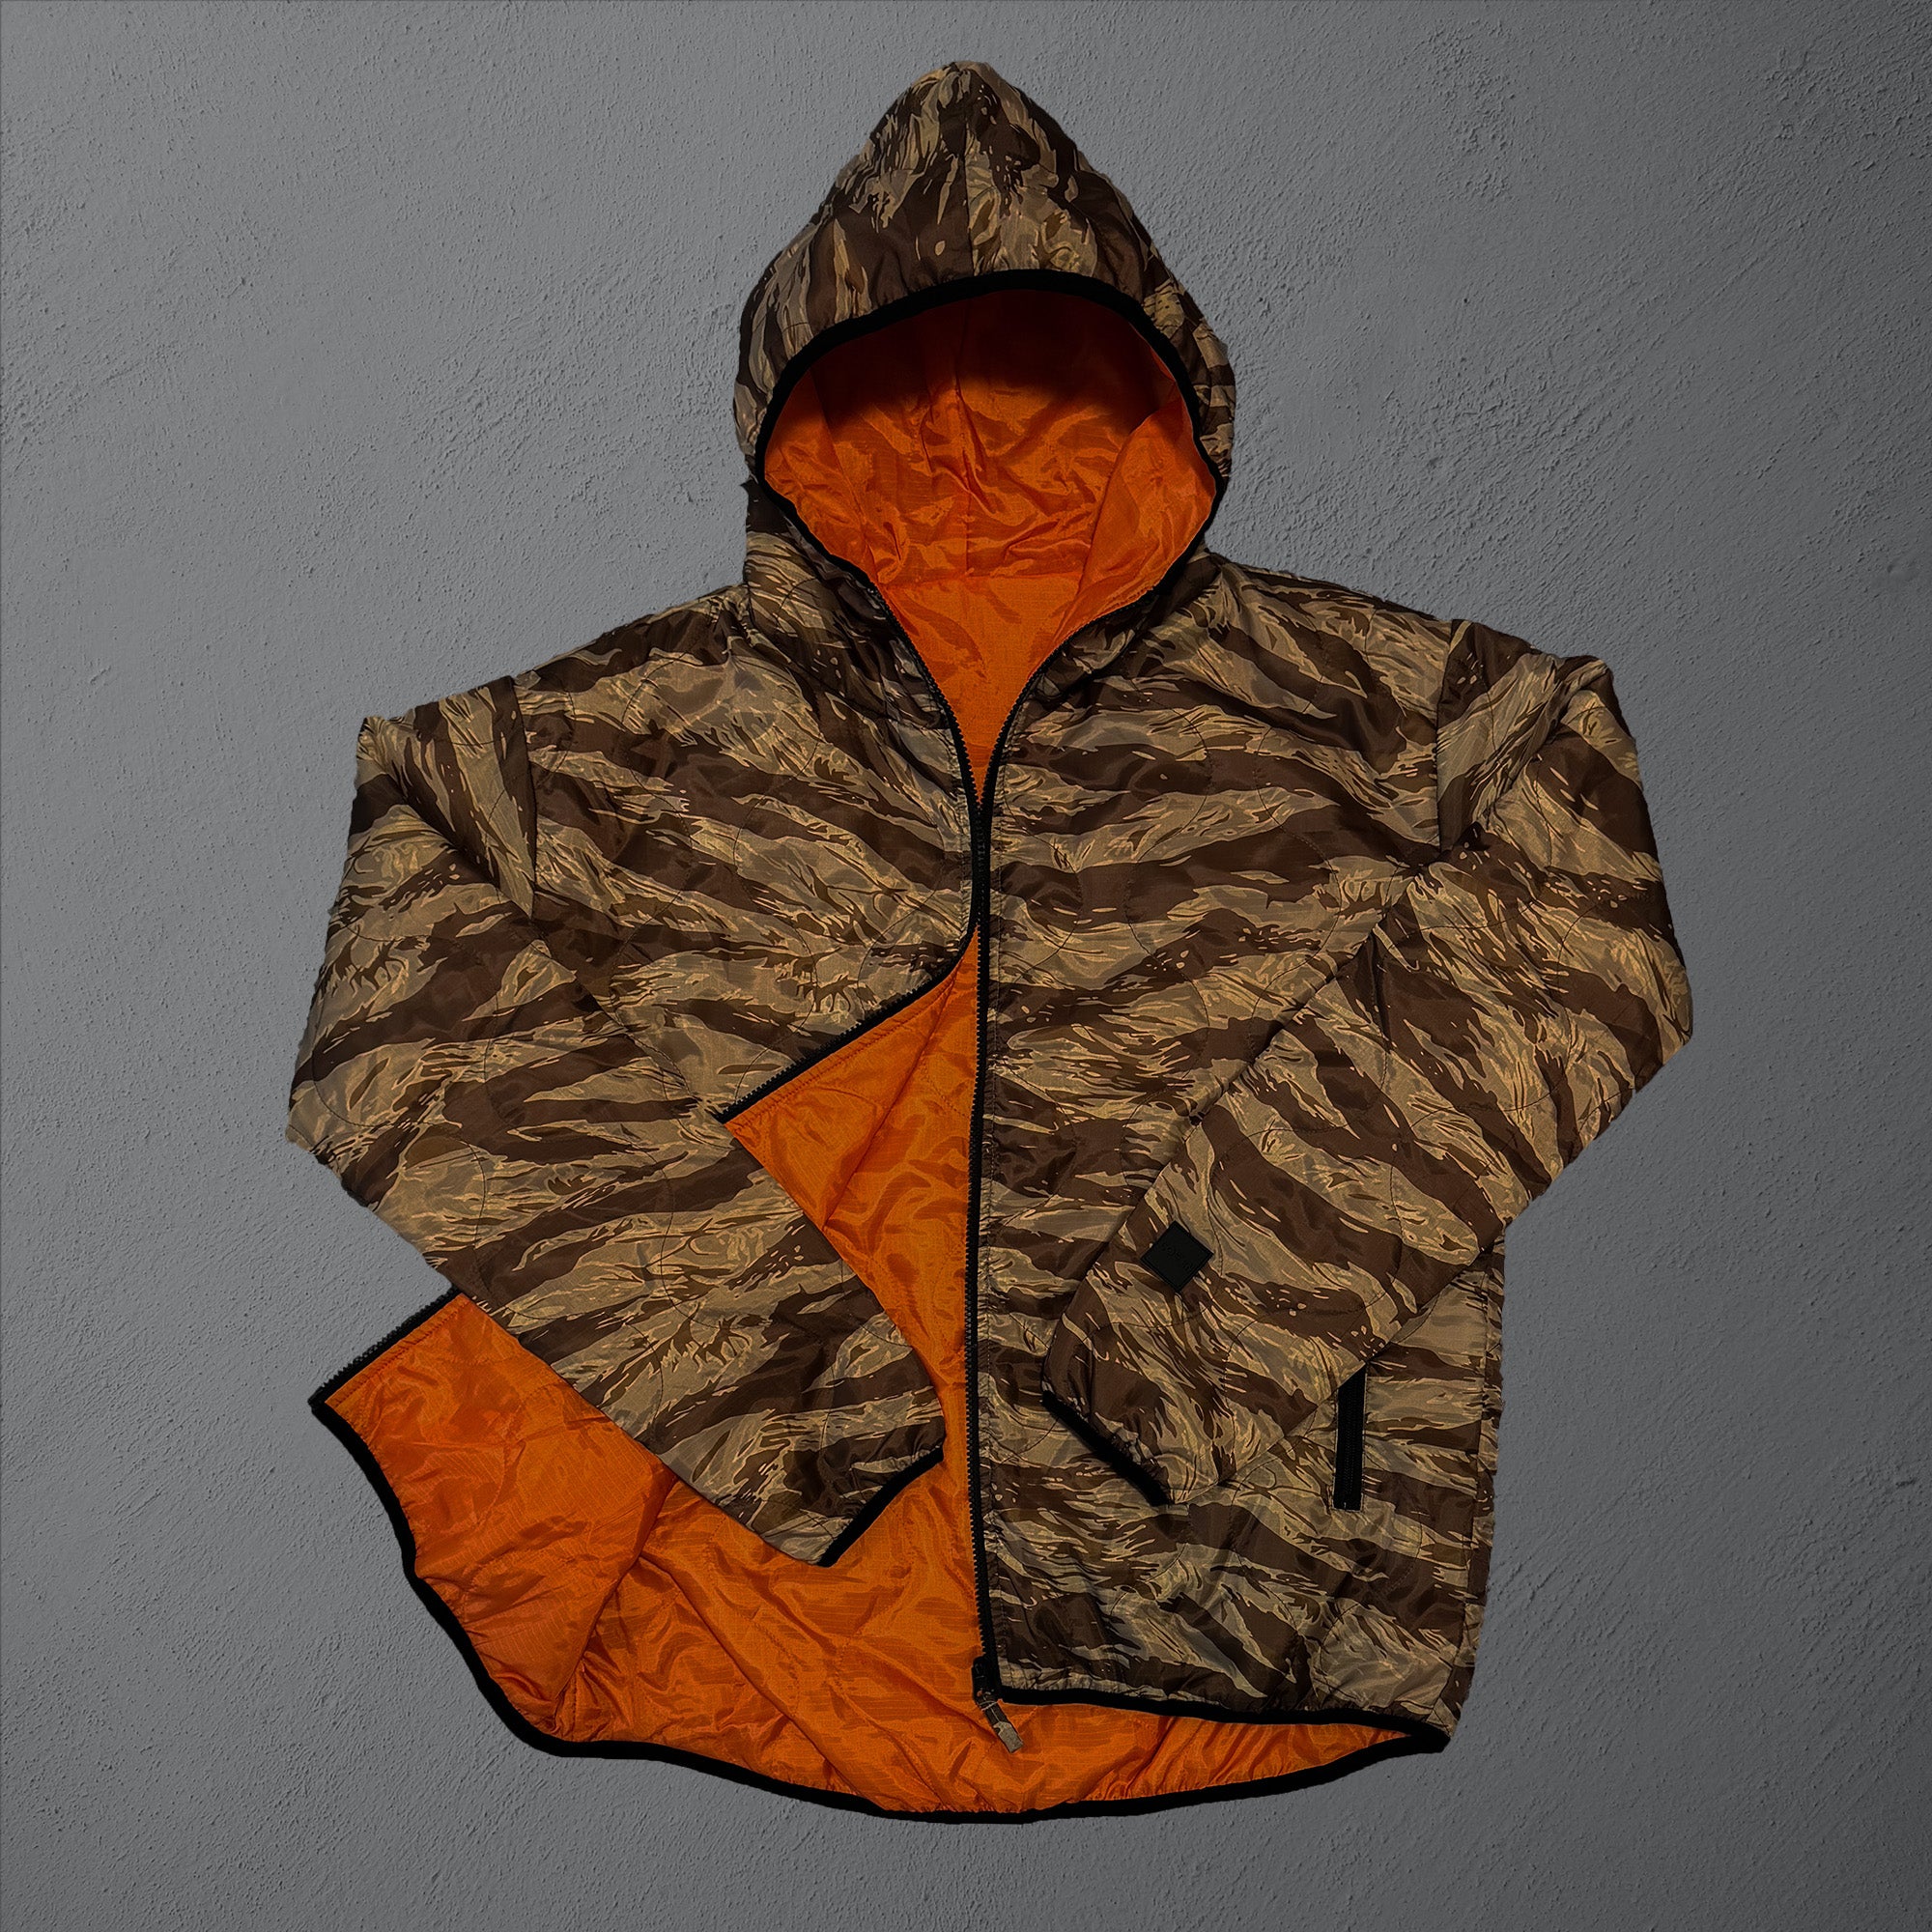 Woobie Jacket V2.0 - Tigerstripe desert / orange reversible